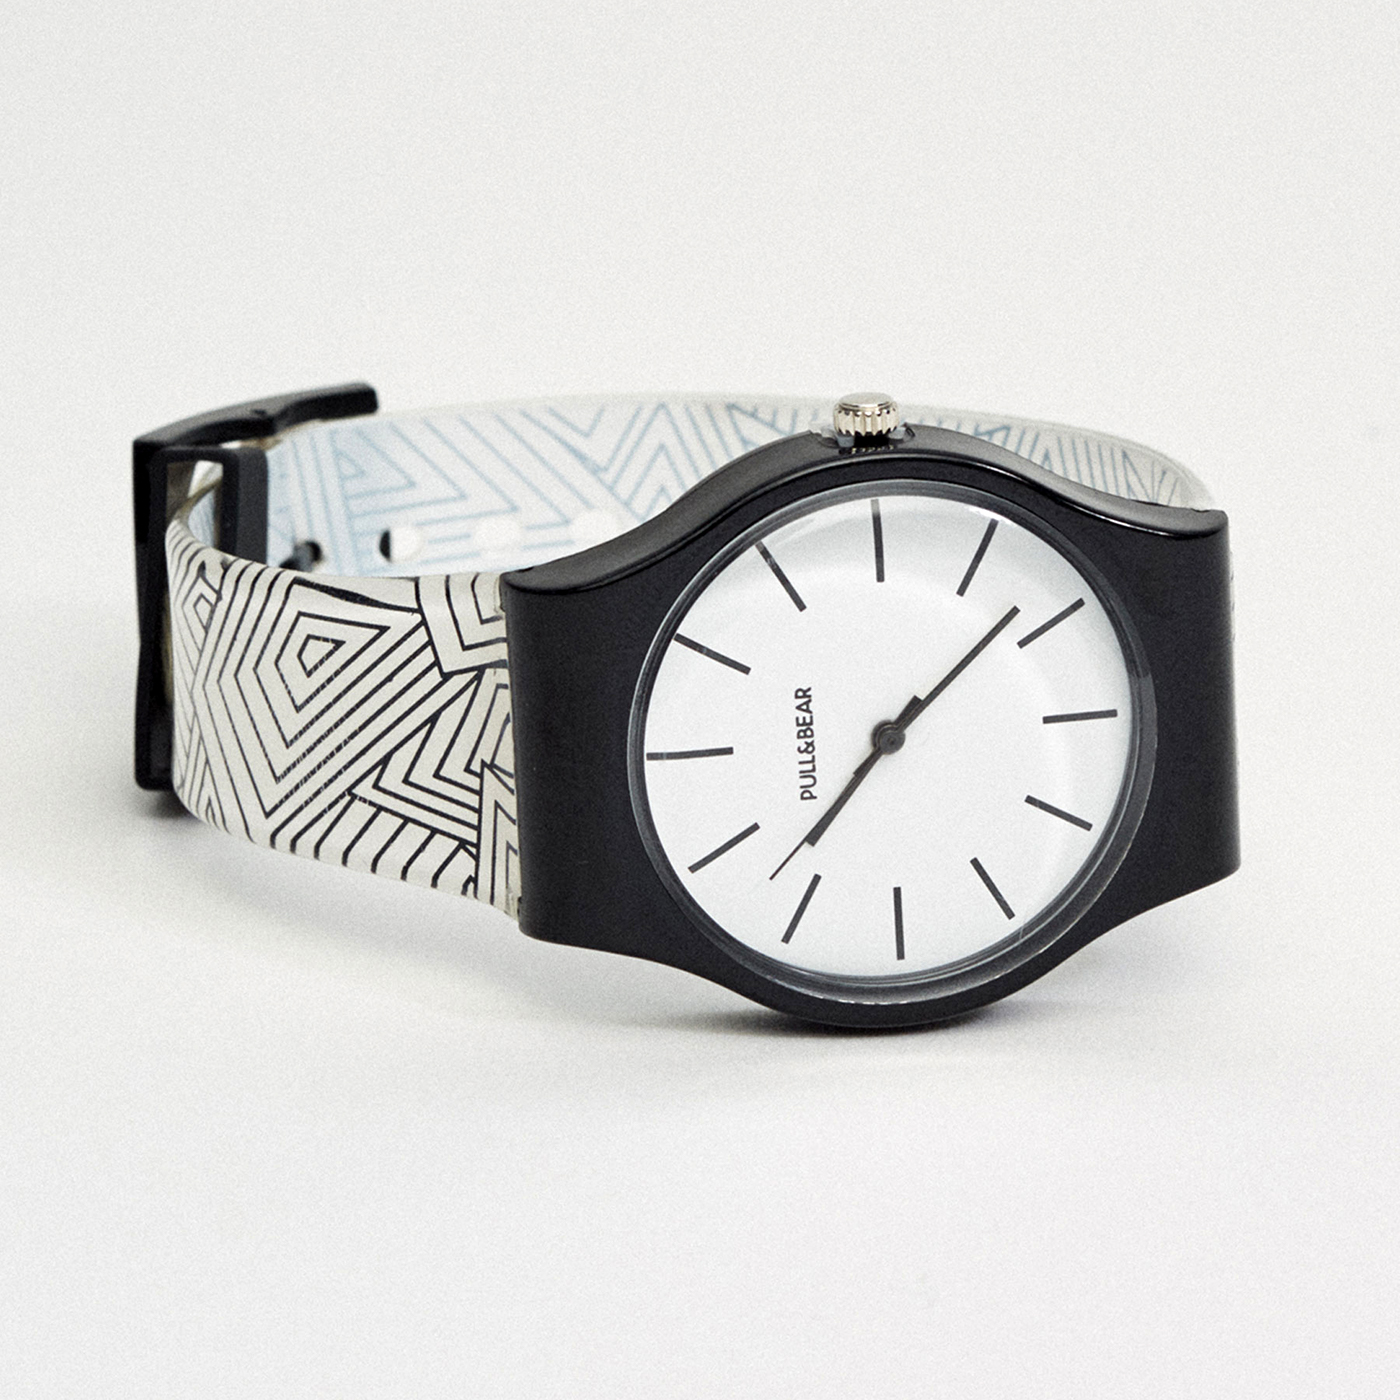 Watches watch Fashion  accessories design ILLUSTRATION  graphic geometric Memphis